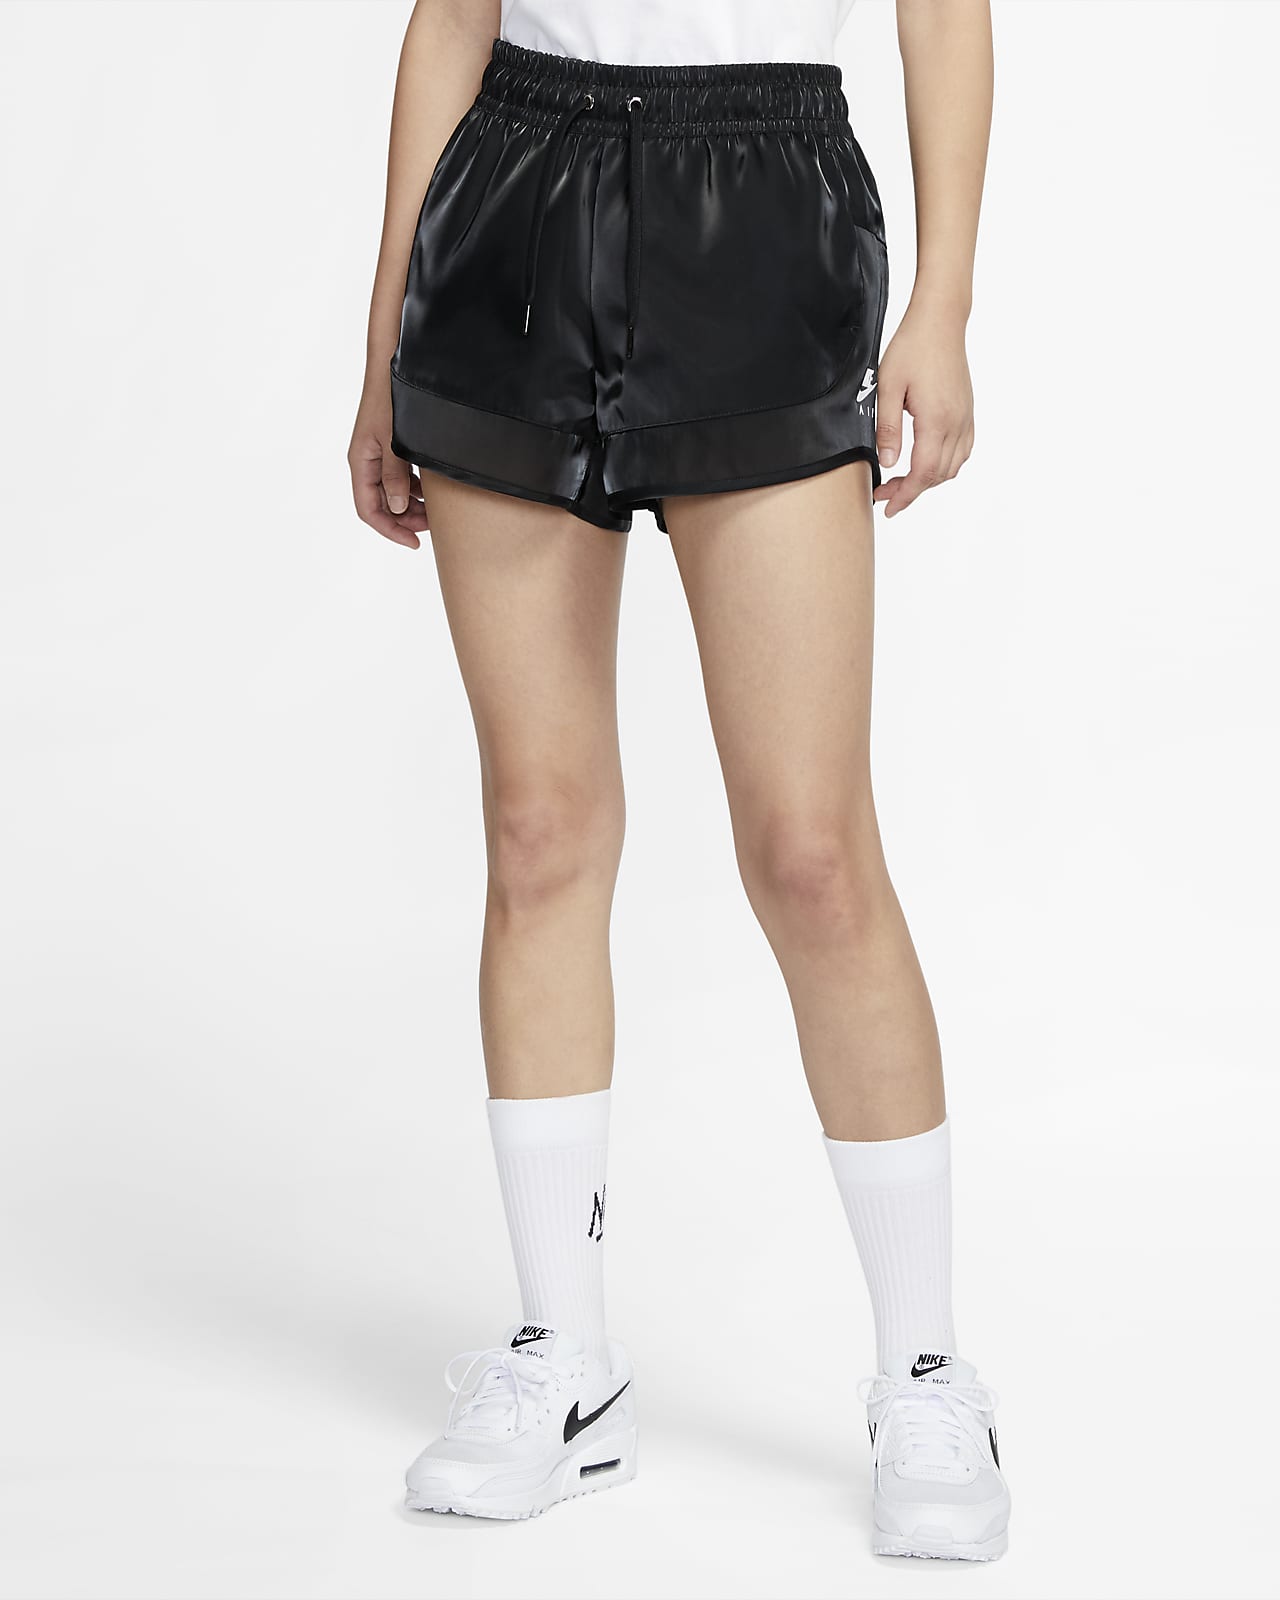 Nike Air Women's Shorts. Nike SG